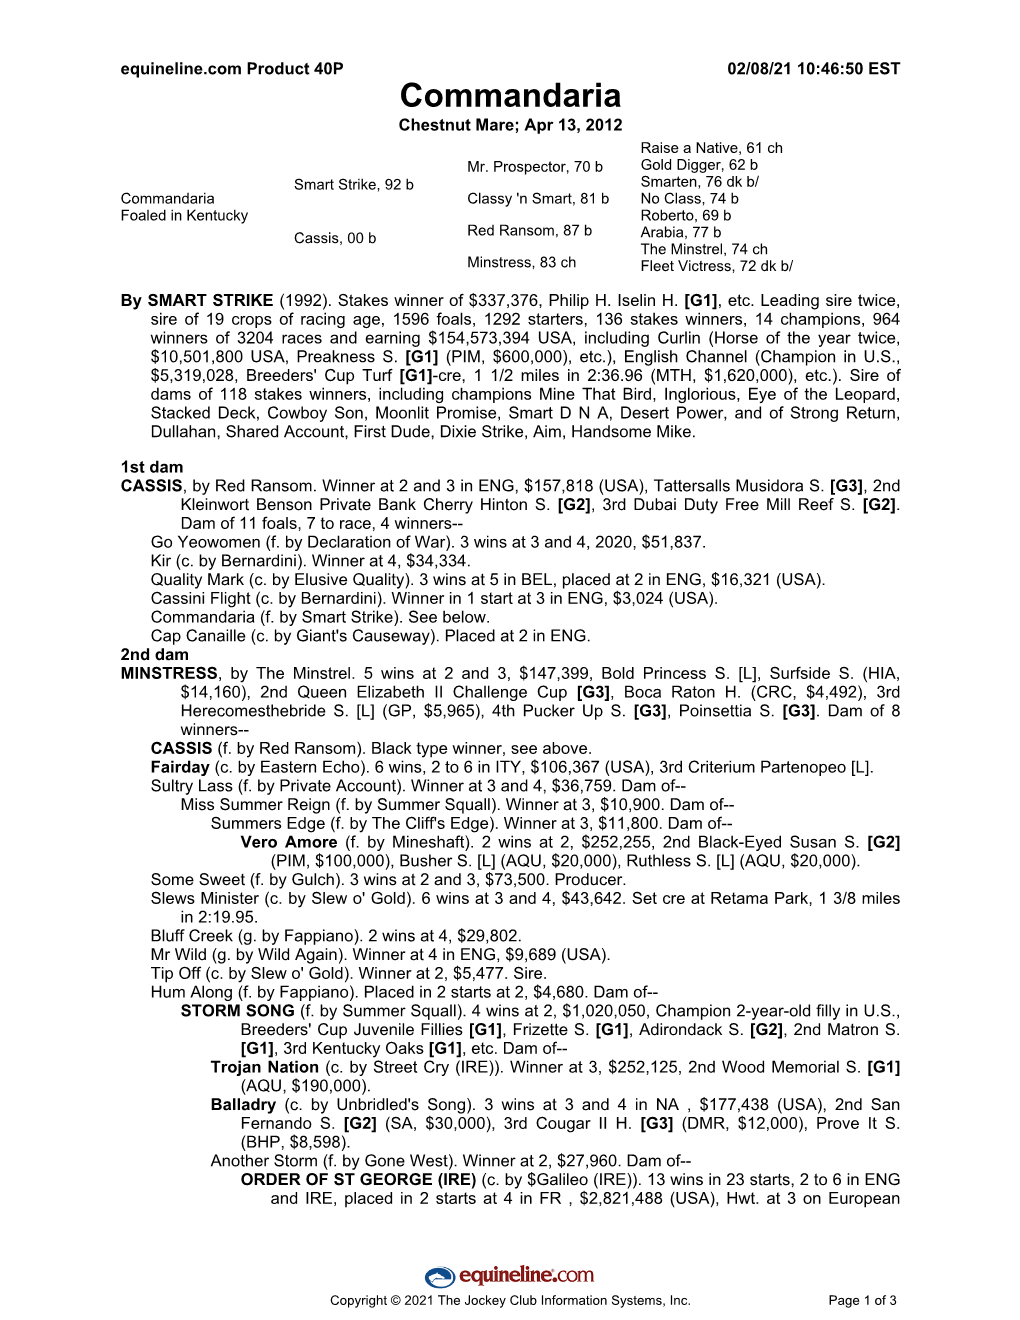 Commandaria Chestnut Mare; Apr 13, 2012 Raise a Native, 61 Ch Mr